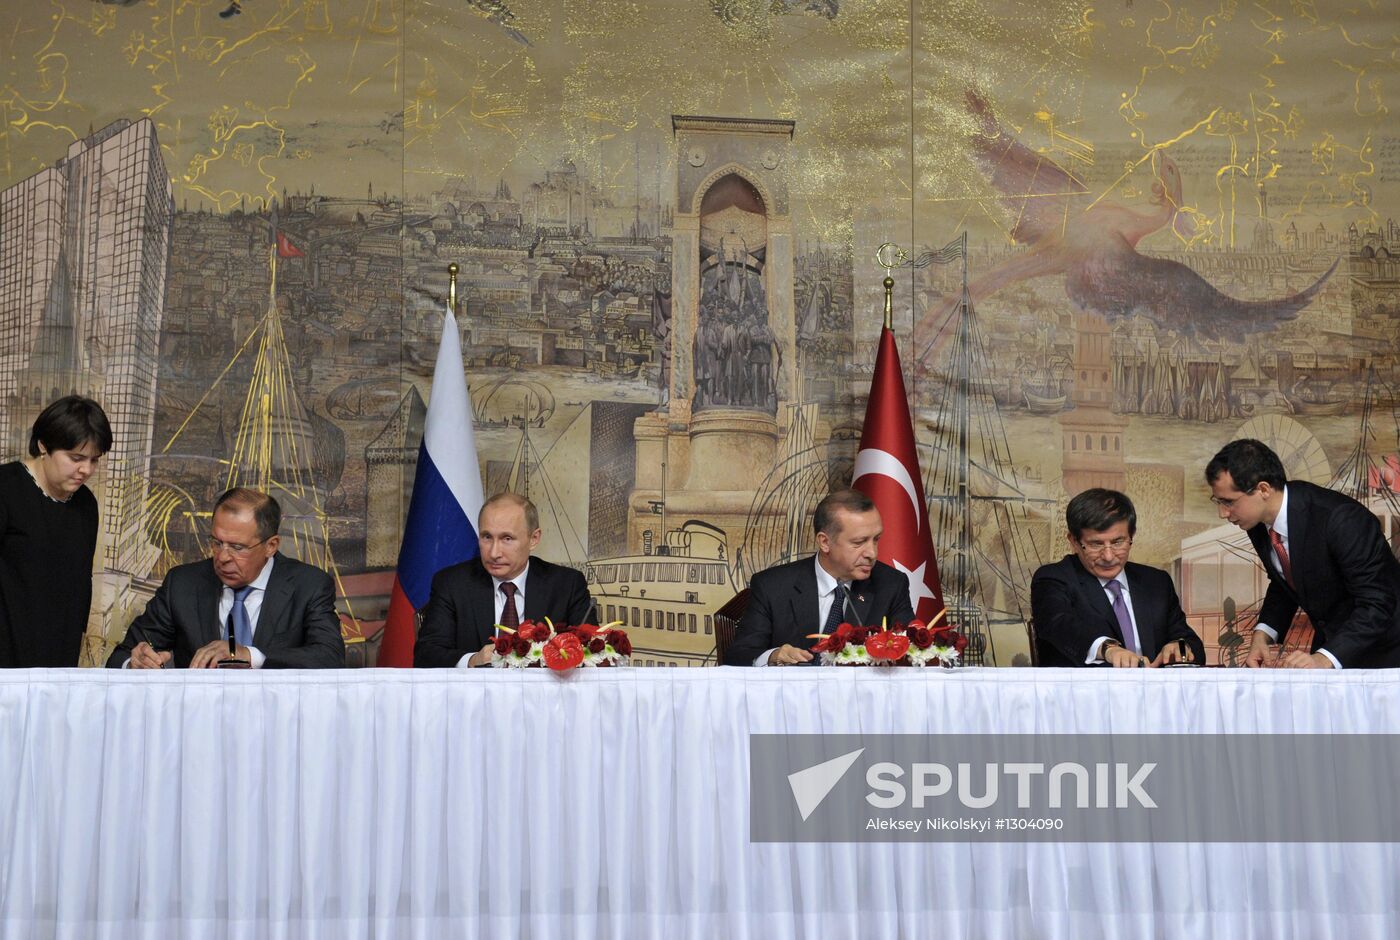 President Vladimir Putin on a visit to Turkey